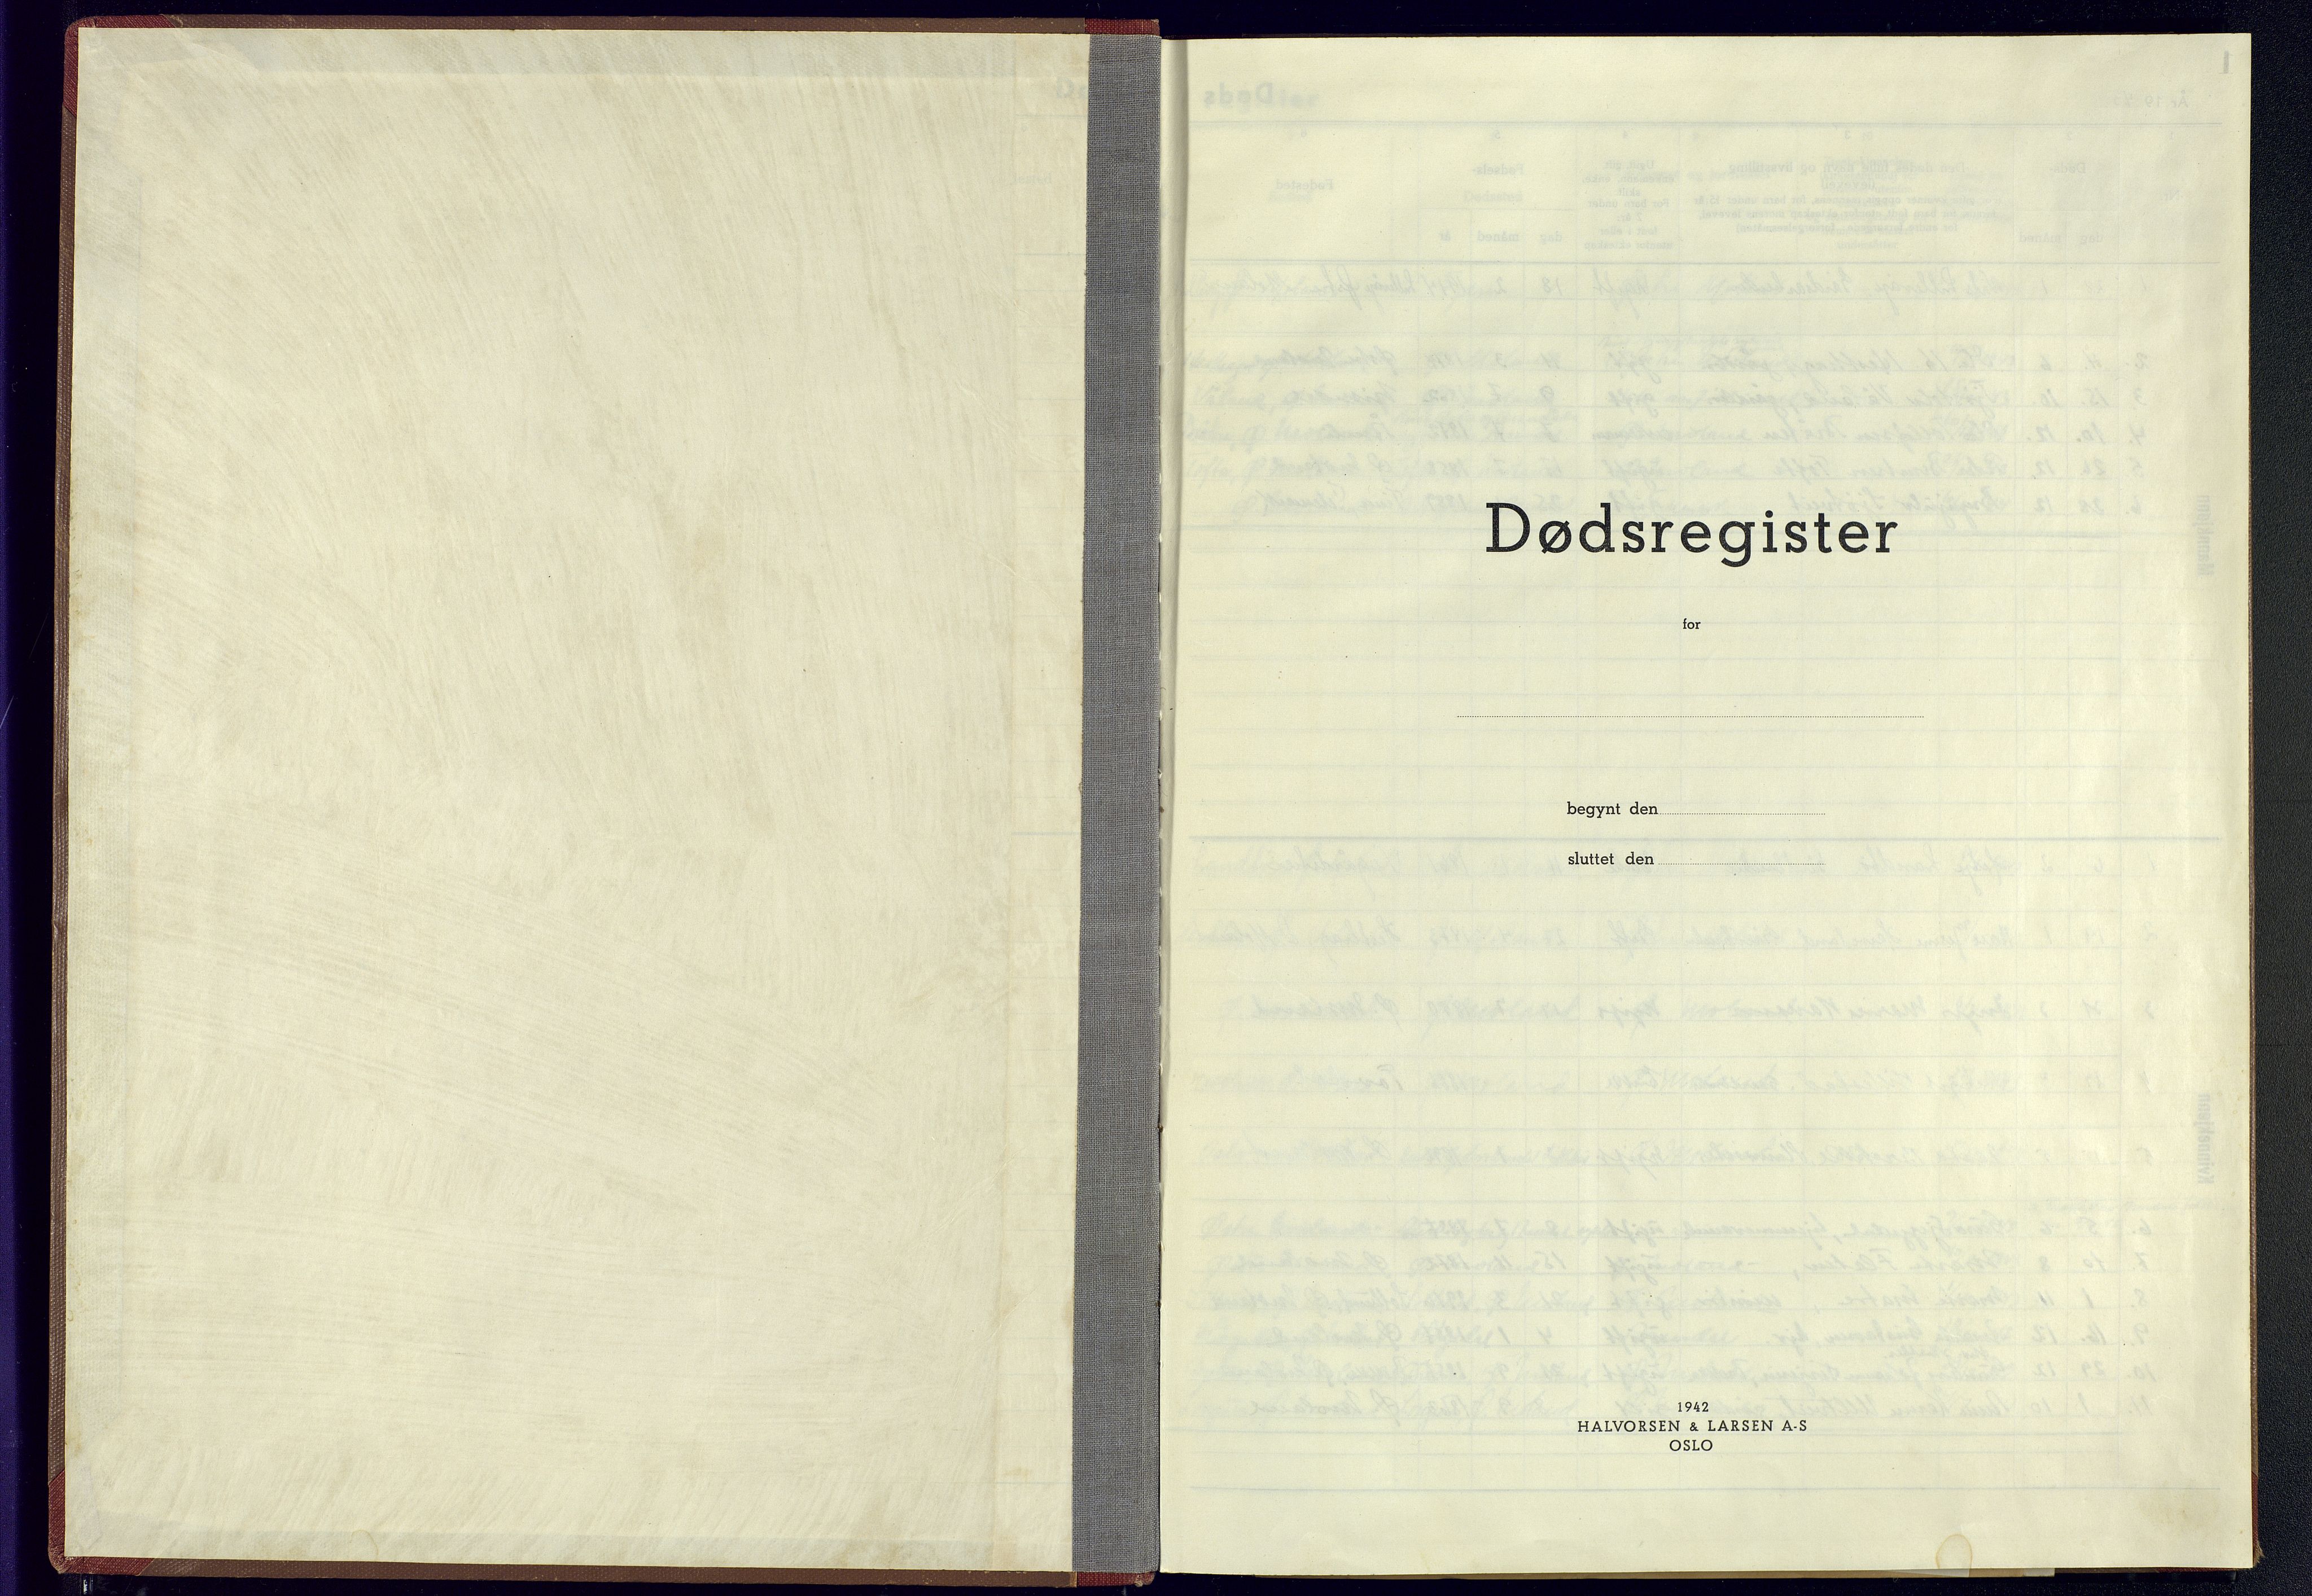 Austre Moland sokneprestkontor, SAK/1111-0001/J/Jb/L0006: A-VI-22 - Dødsfallsregister Austre Moland, 1943-1945